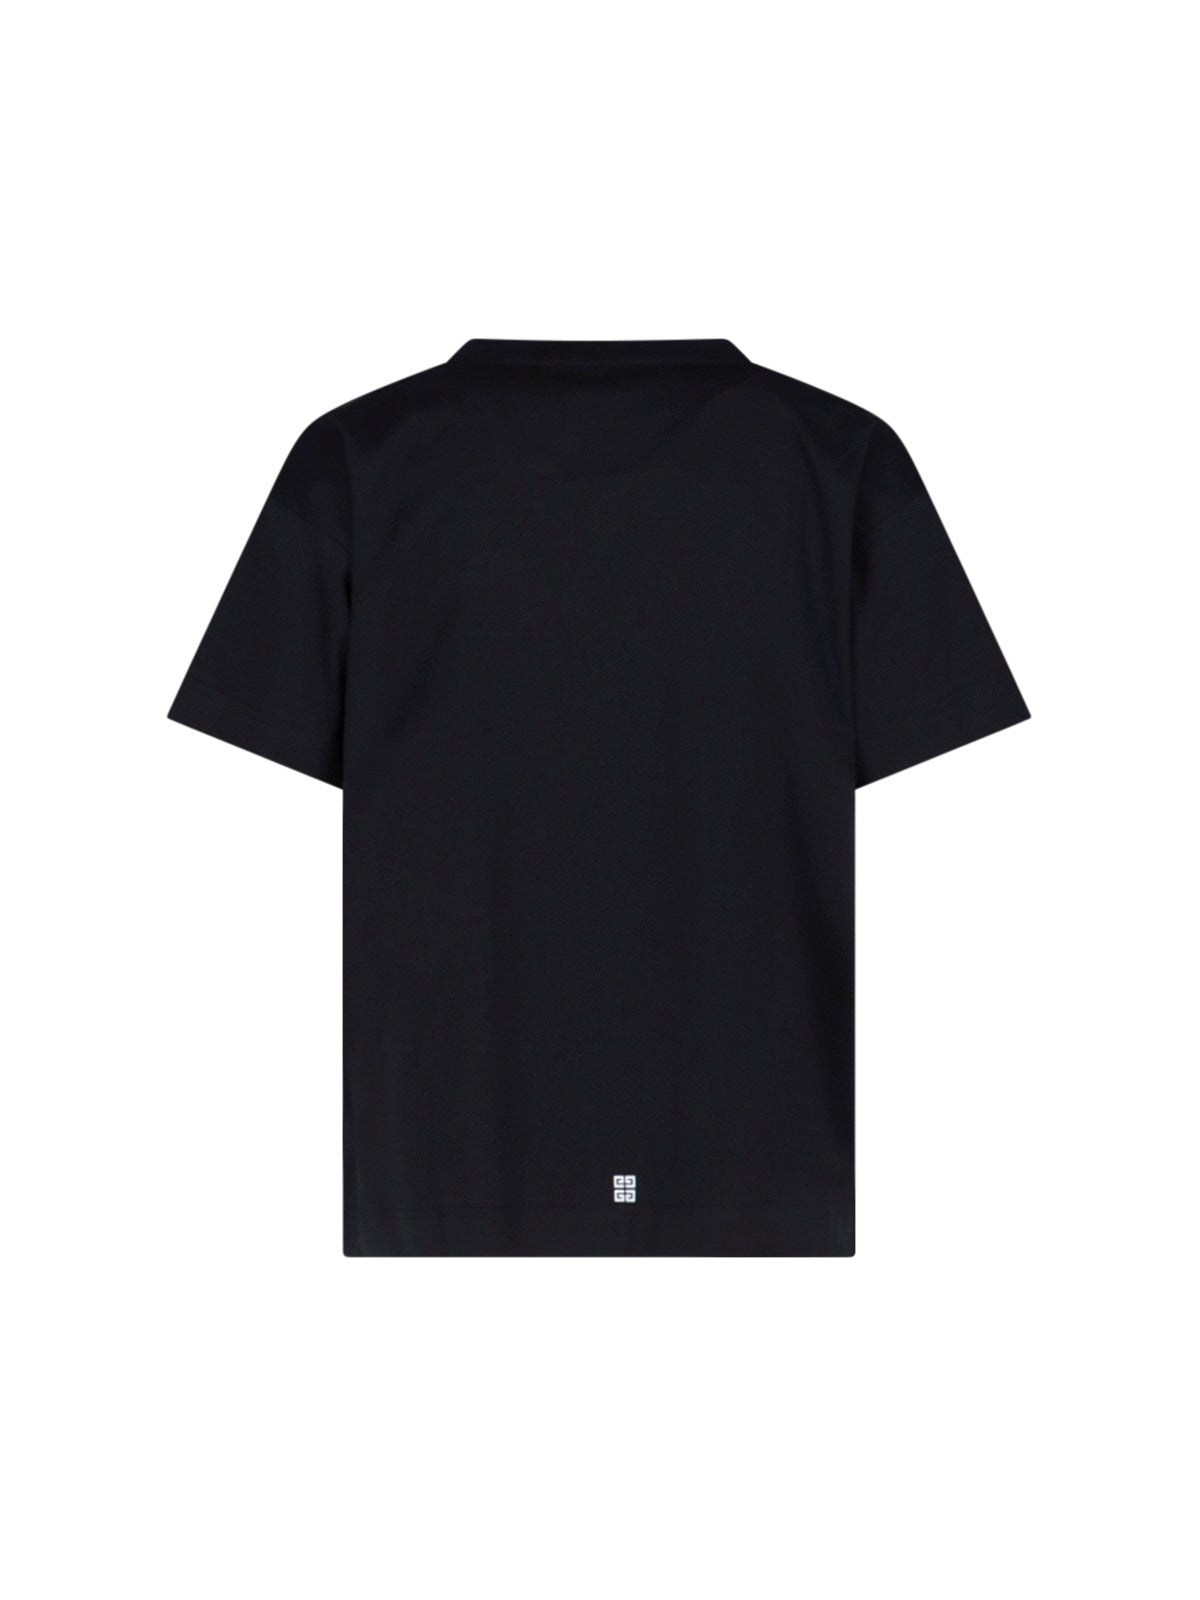 Givenchy T-Shirt stampata-t-shirt-Givenchy-T-shirt stampata Givenchy, in cotone nero, girocollo, maniche corte, stampa logo bianco fronte, stampa fulmini reflective fronte, stampa "4g" bianca retro, orlo dritto-Dresso